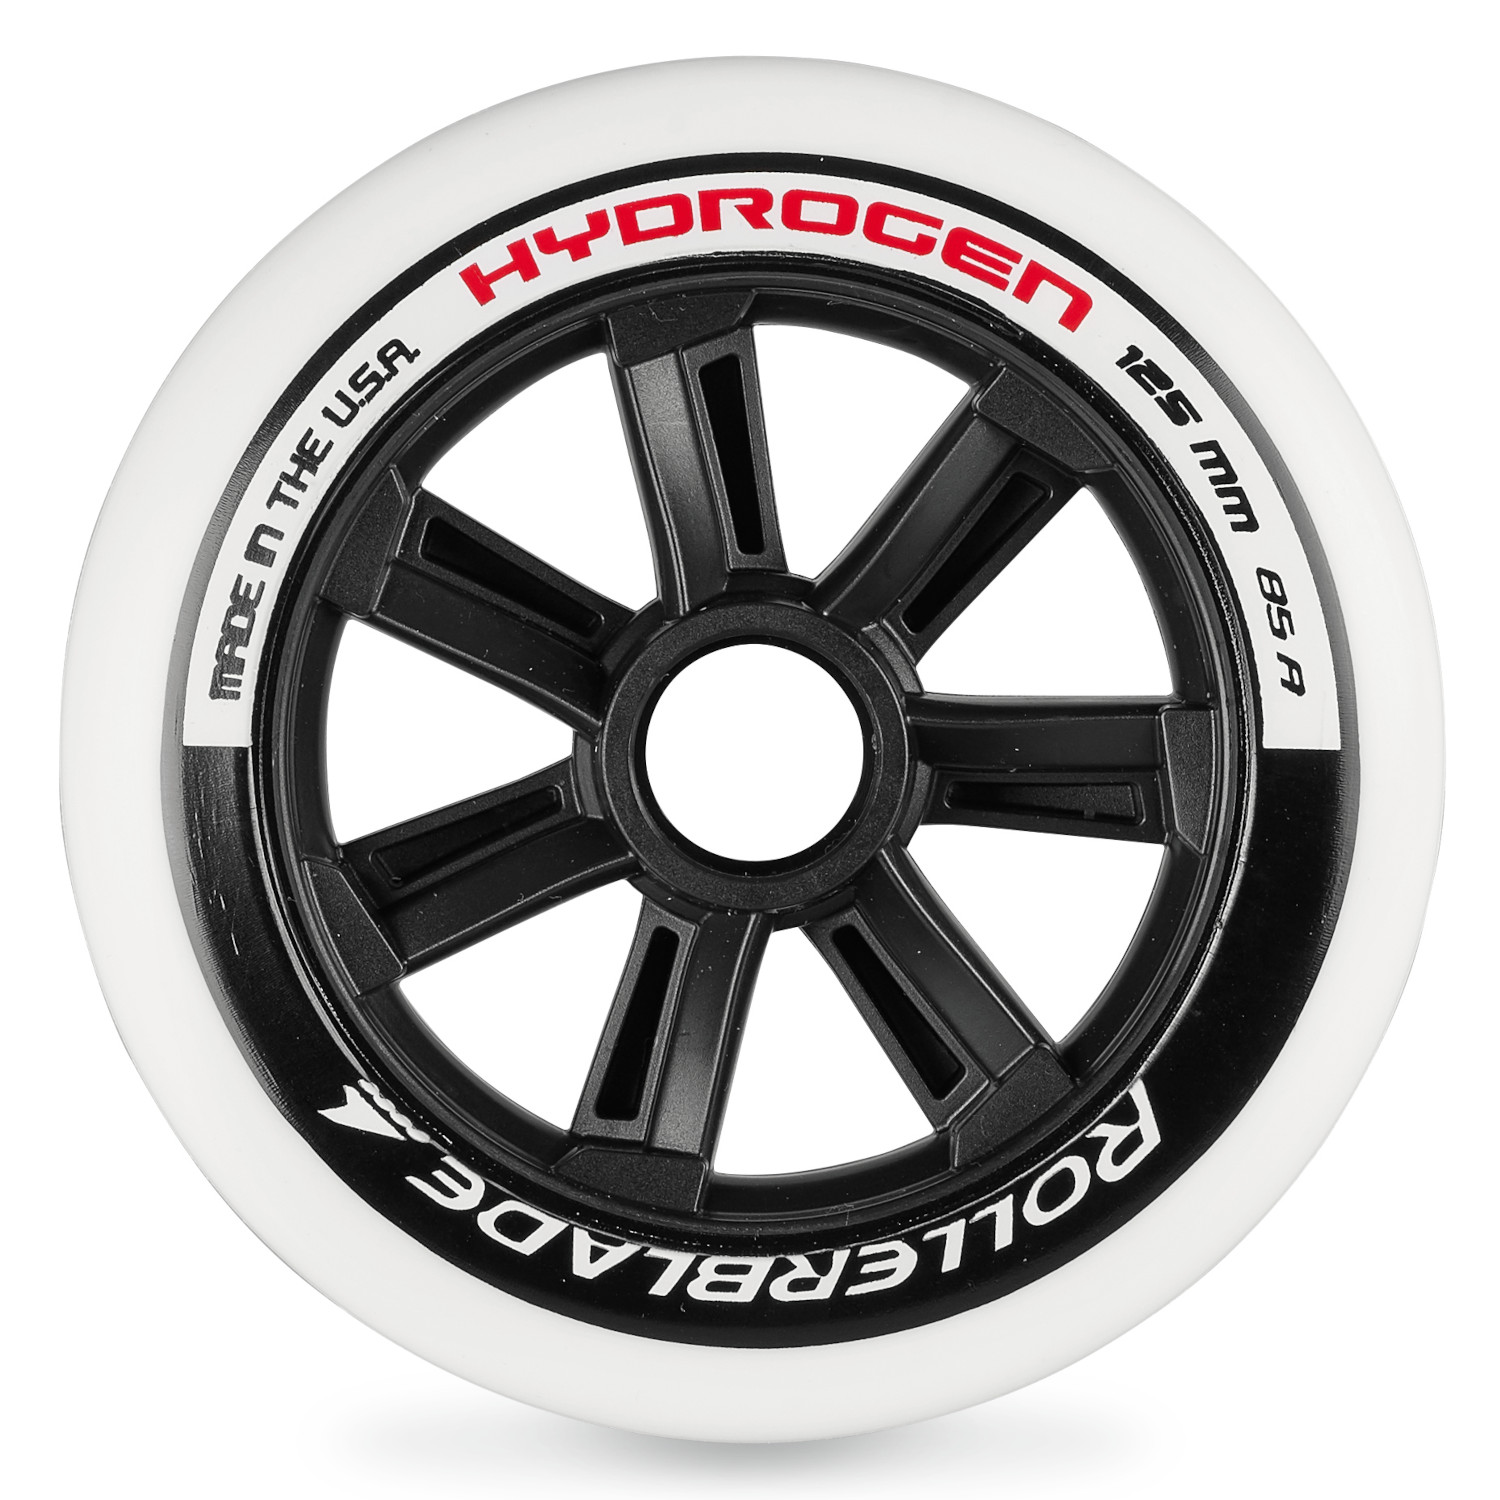 Productfoto van Rollerblade Hydrogen Wheels - 125mm/85A - Pakje van 6